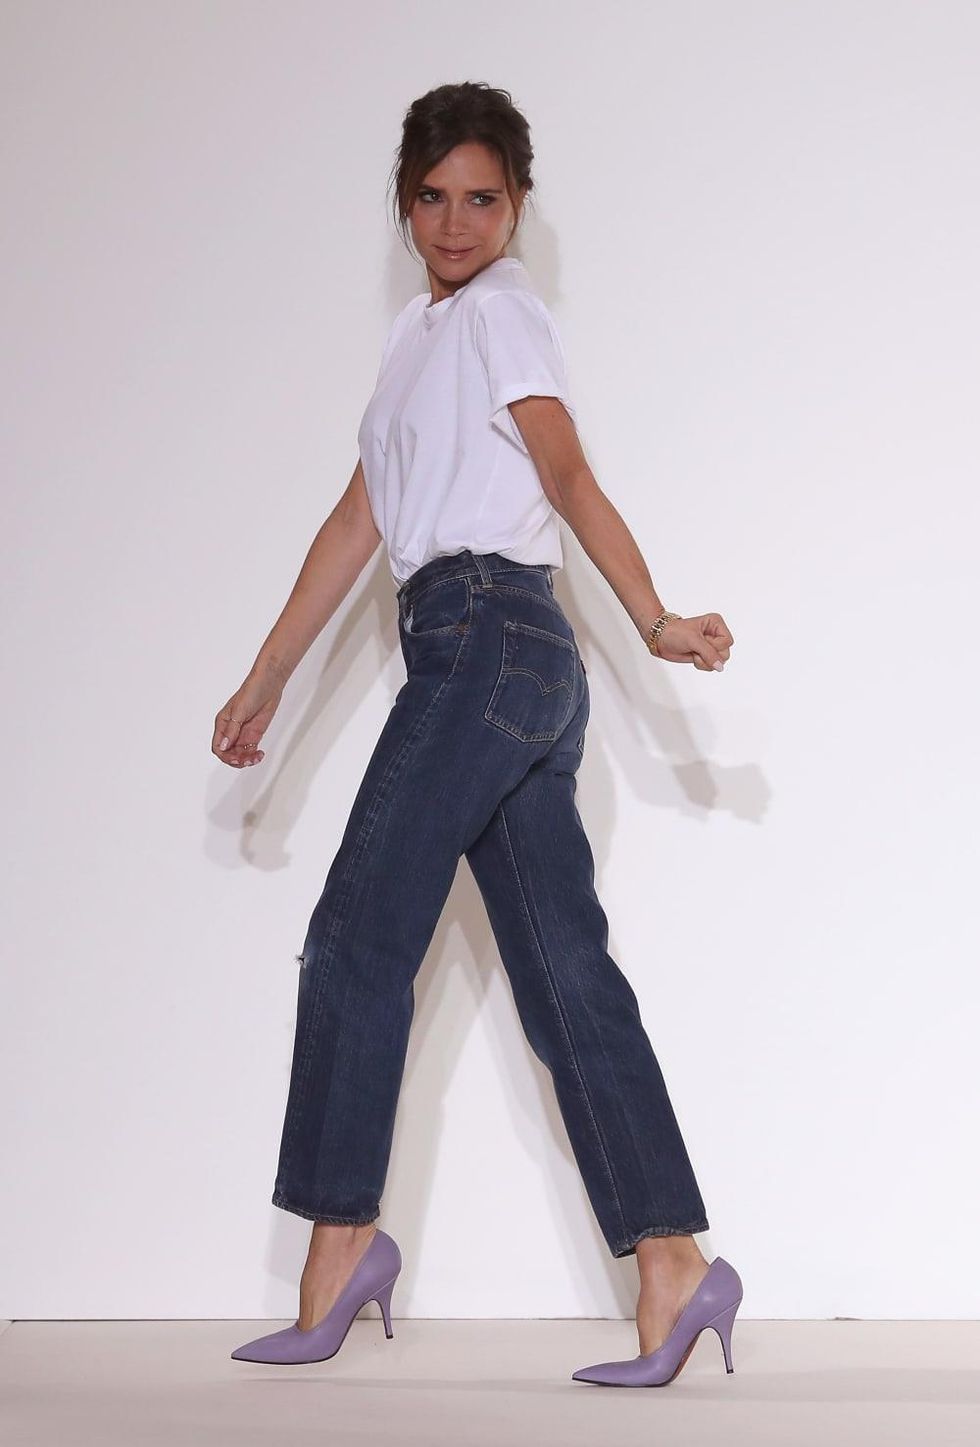 Victoria Beckham takes runway bow New York Fashion Week